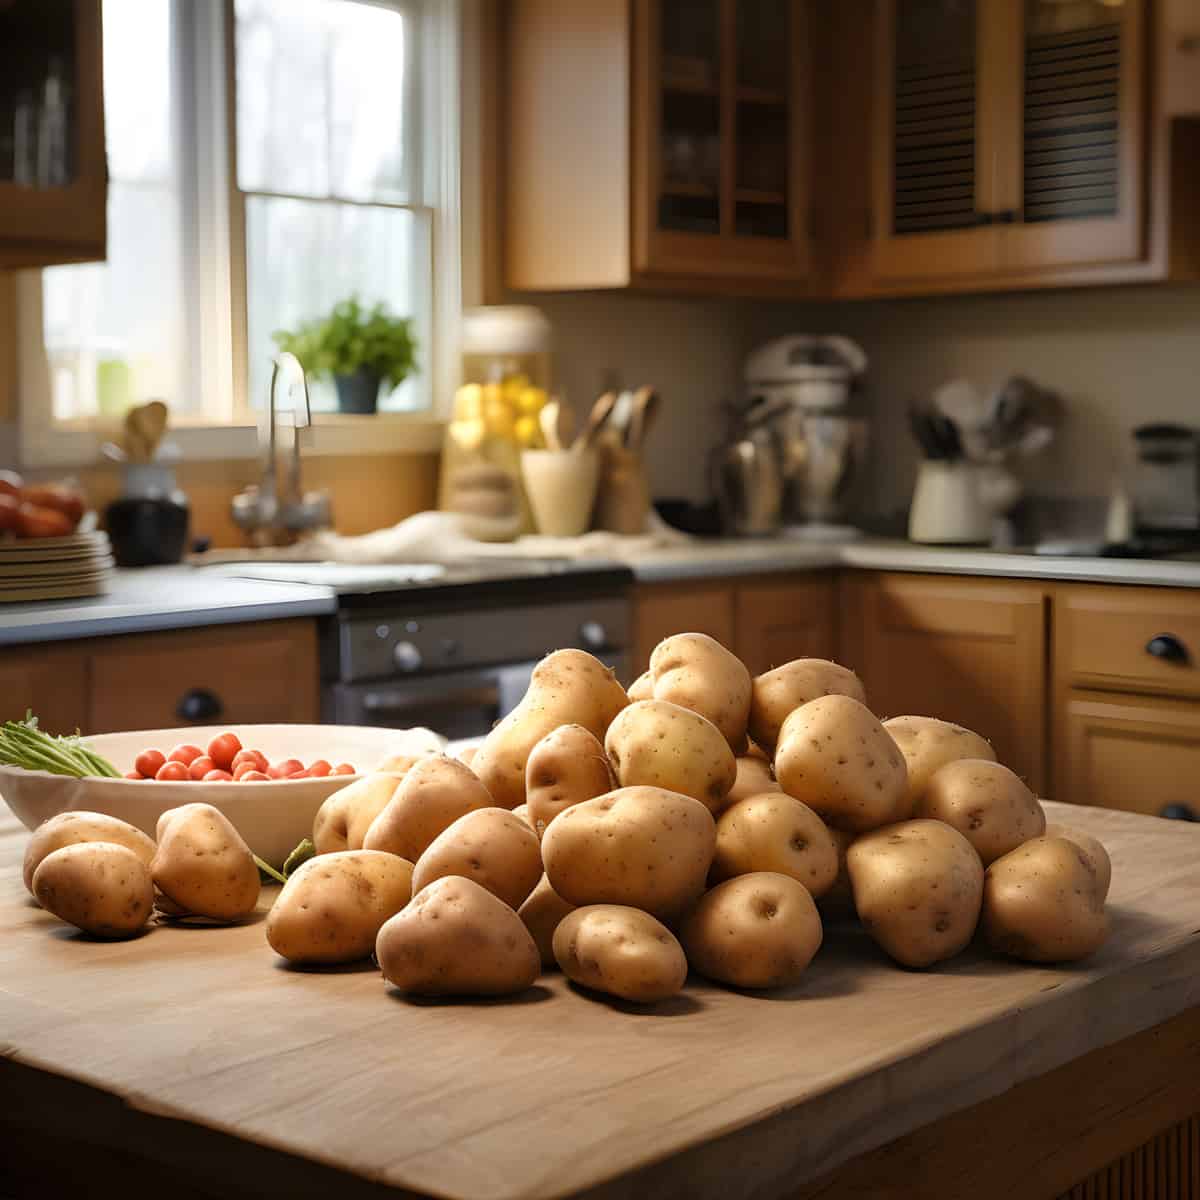 Barbara Potatoes on a kitchen counter